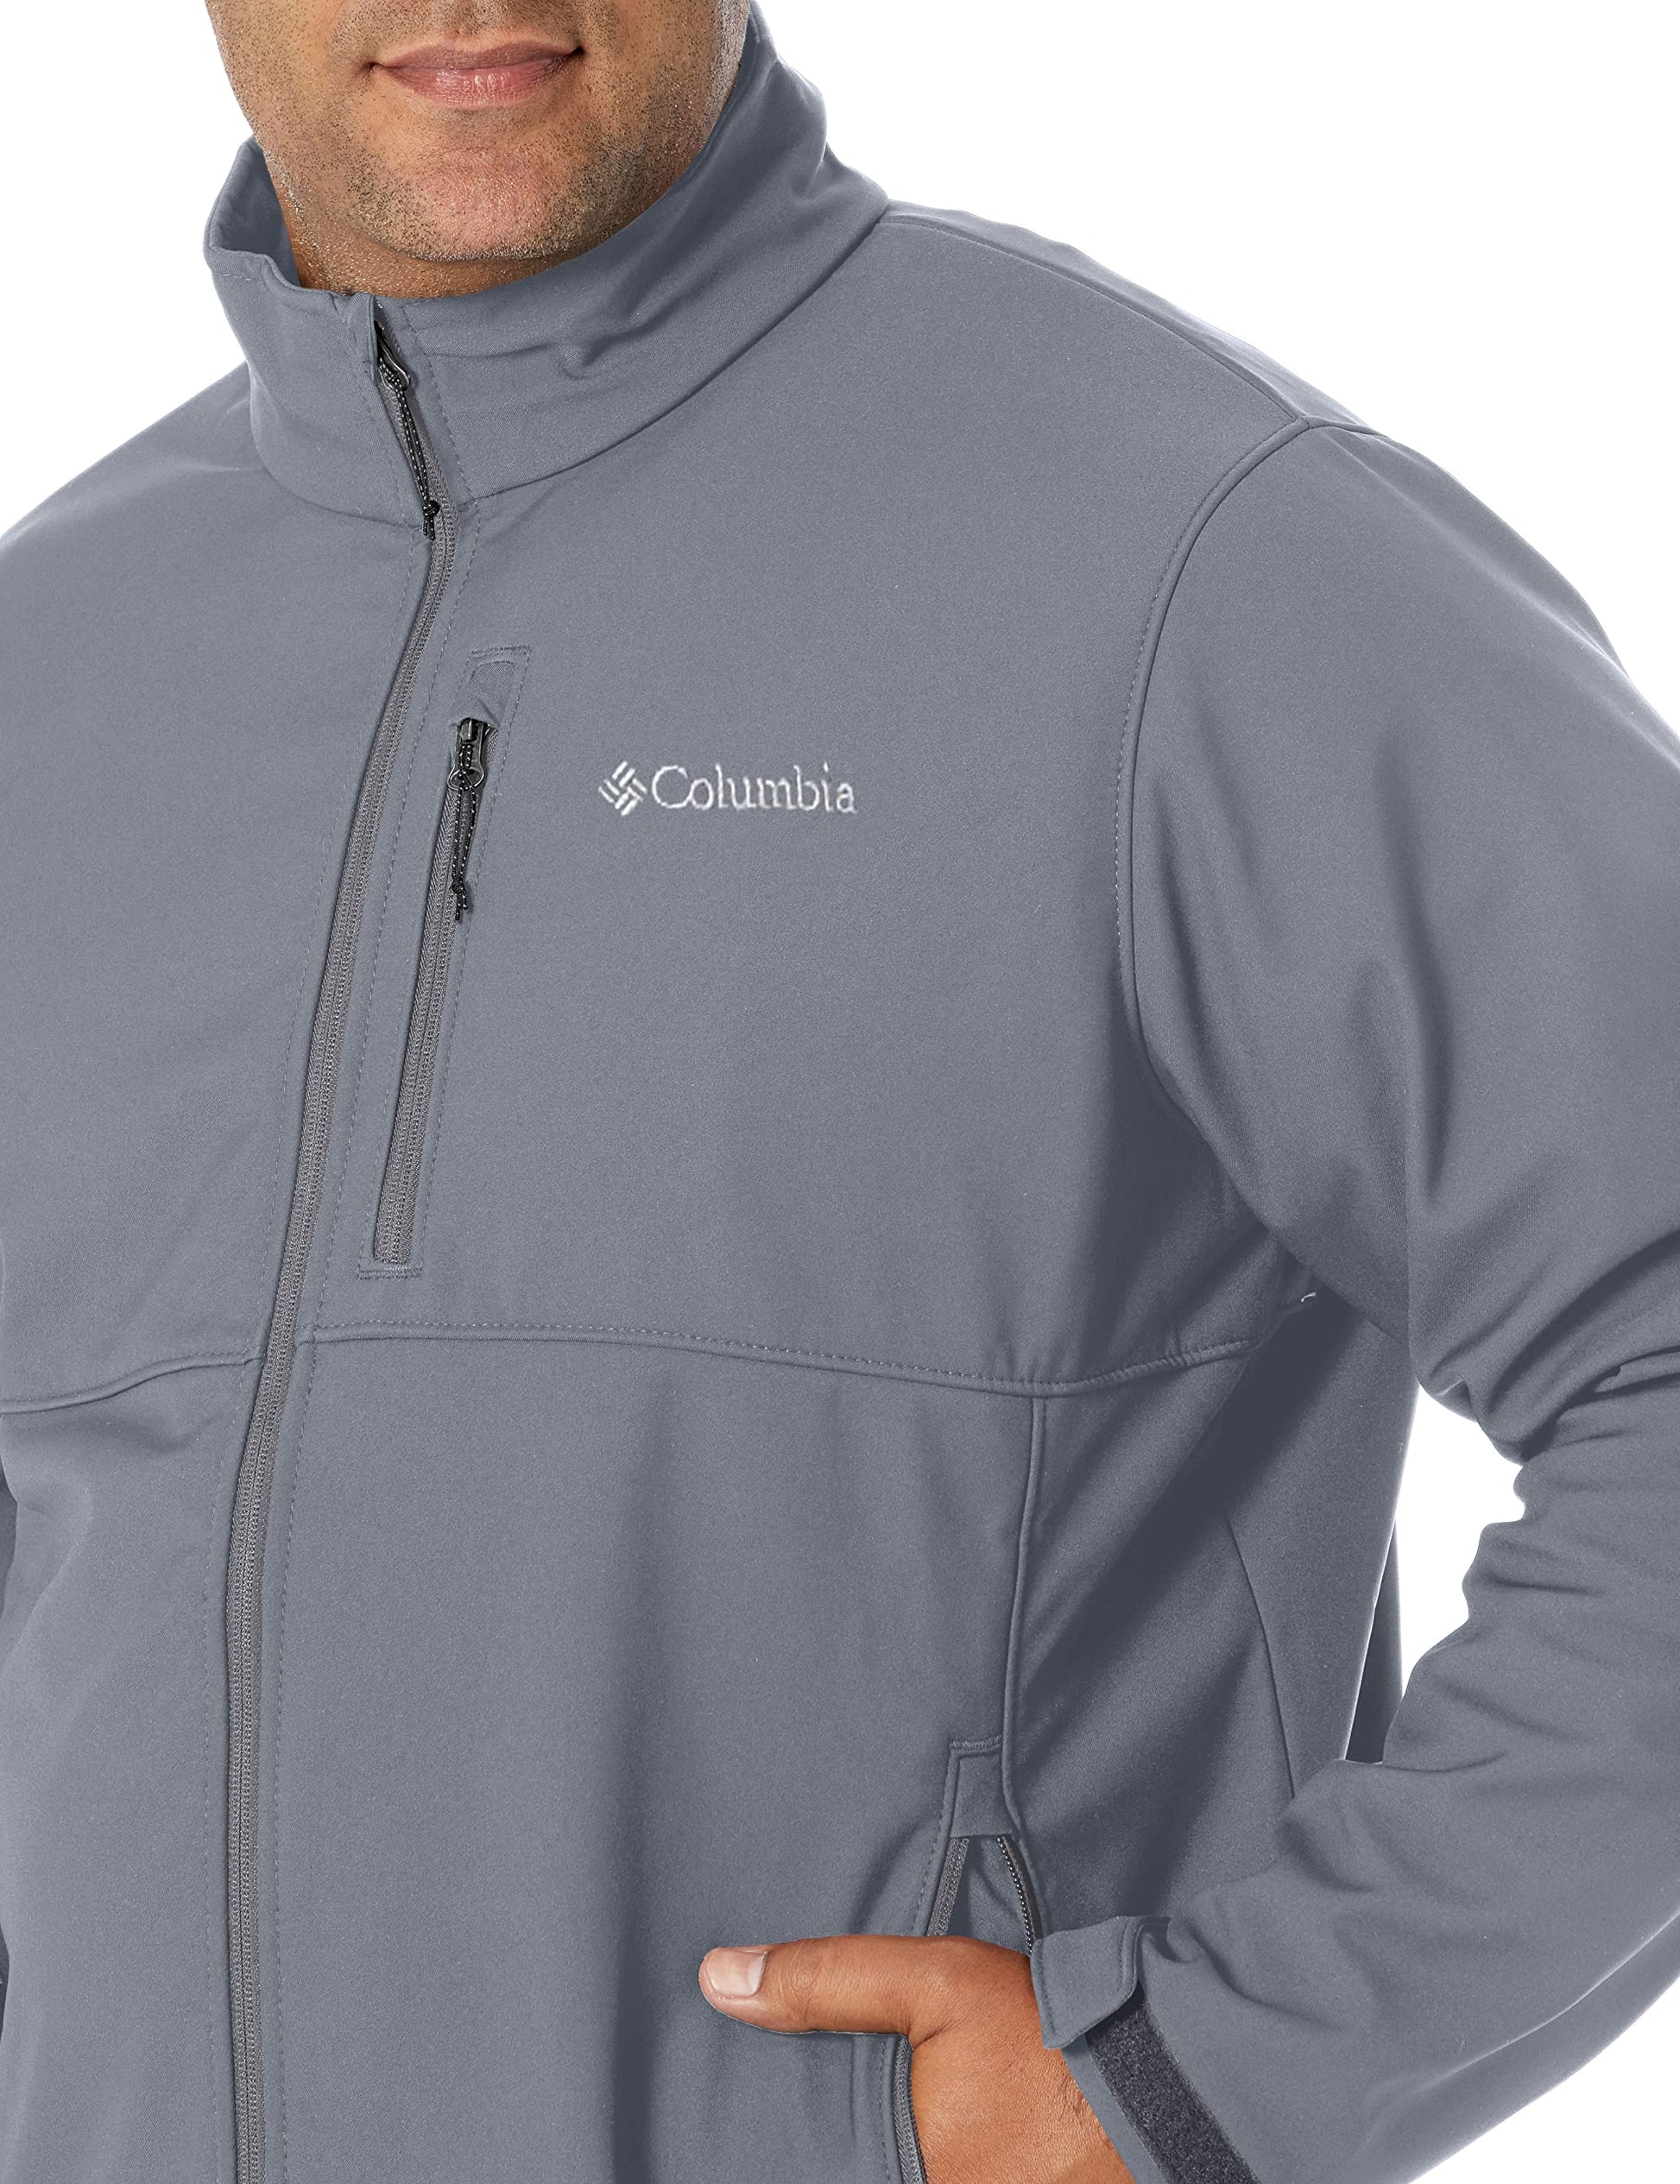 Columbia Men's Synthetic Jacket (WM6044-53_Graphite_Large) 